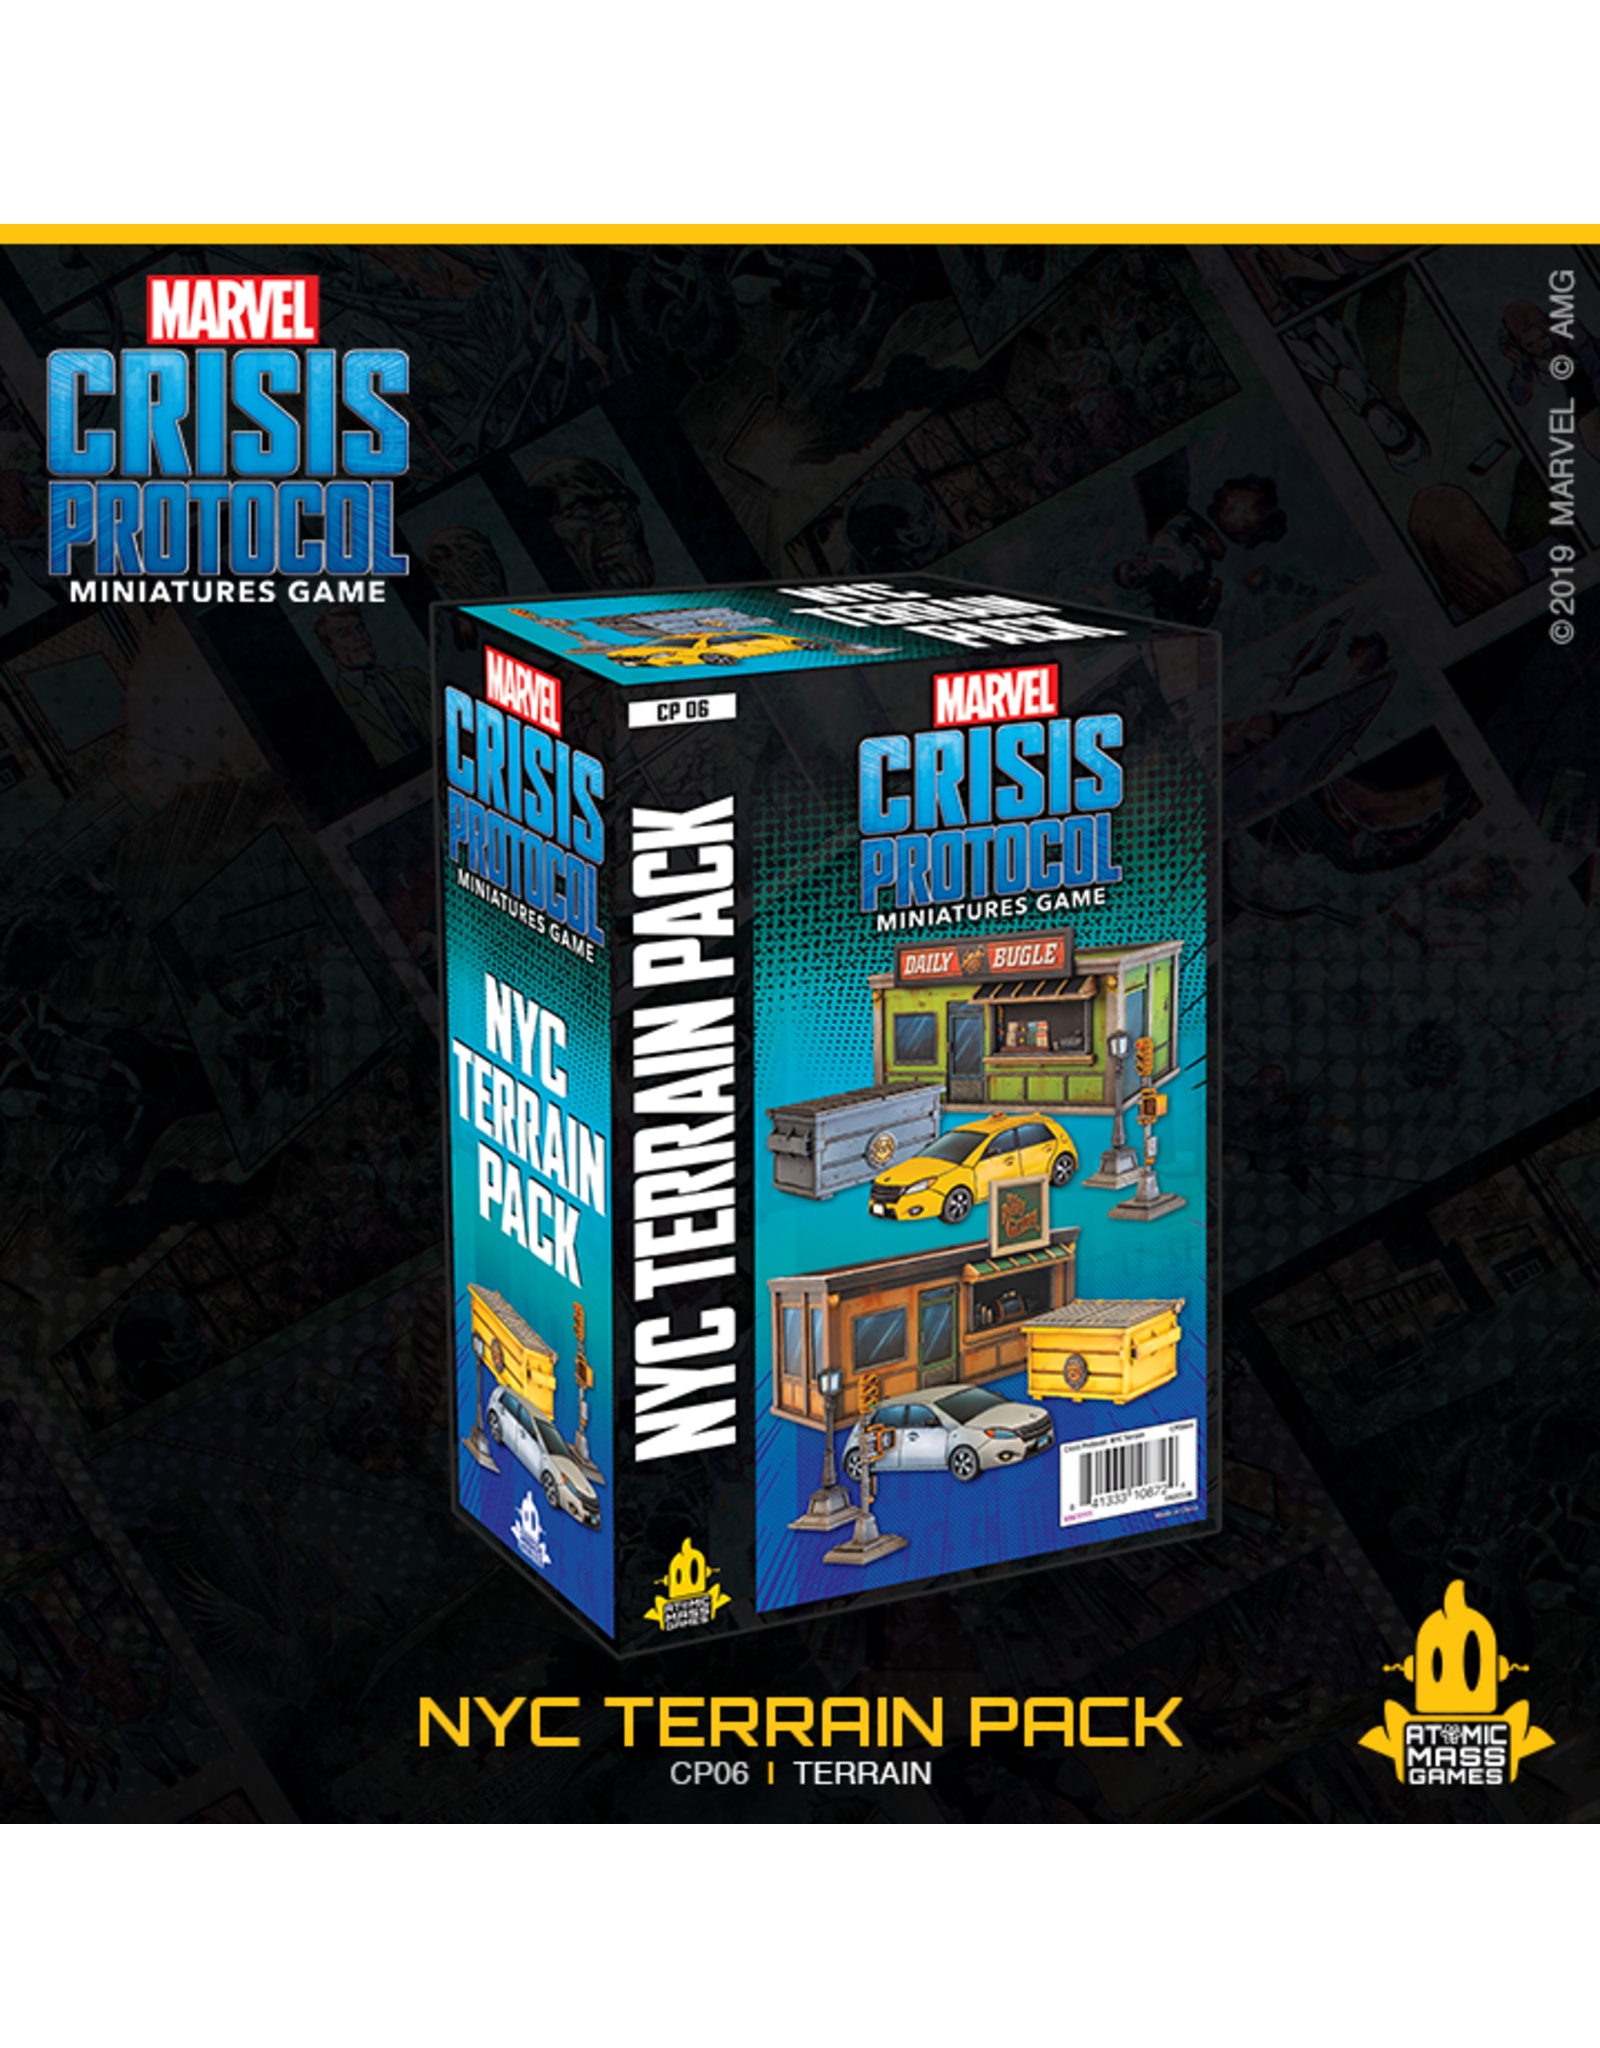 ATOMIC MASS GAMES CP06 NYC Terrain Pack